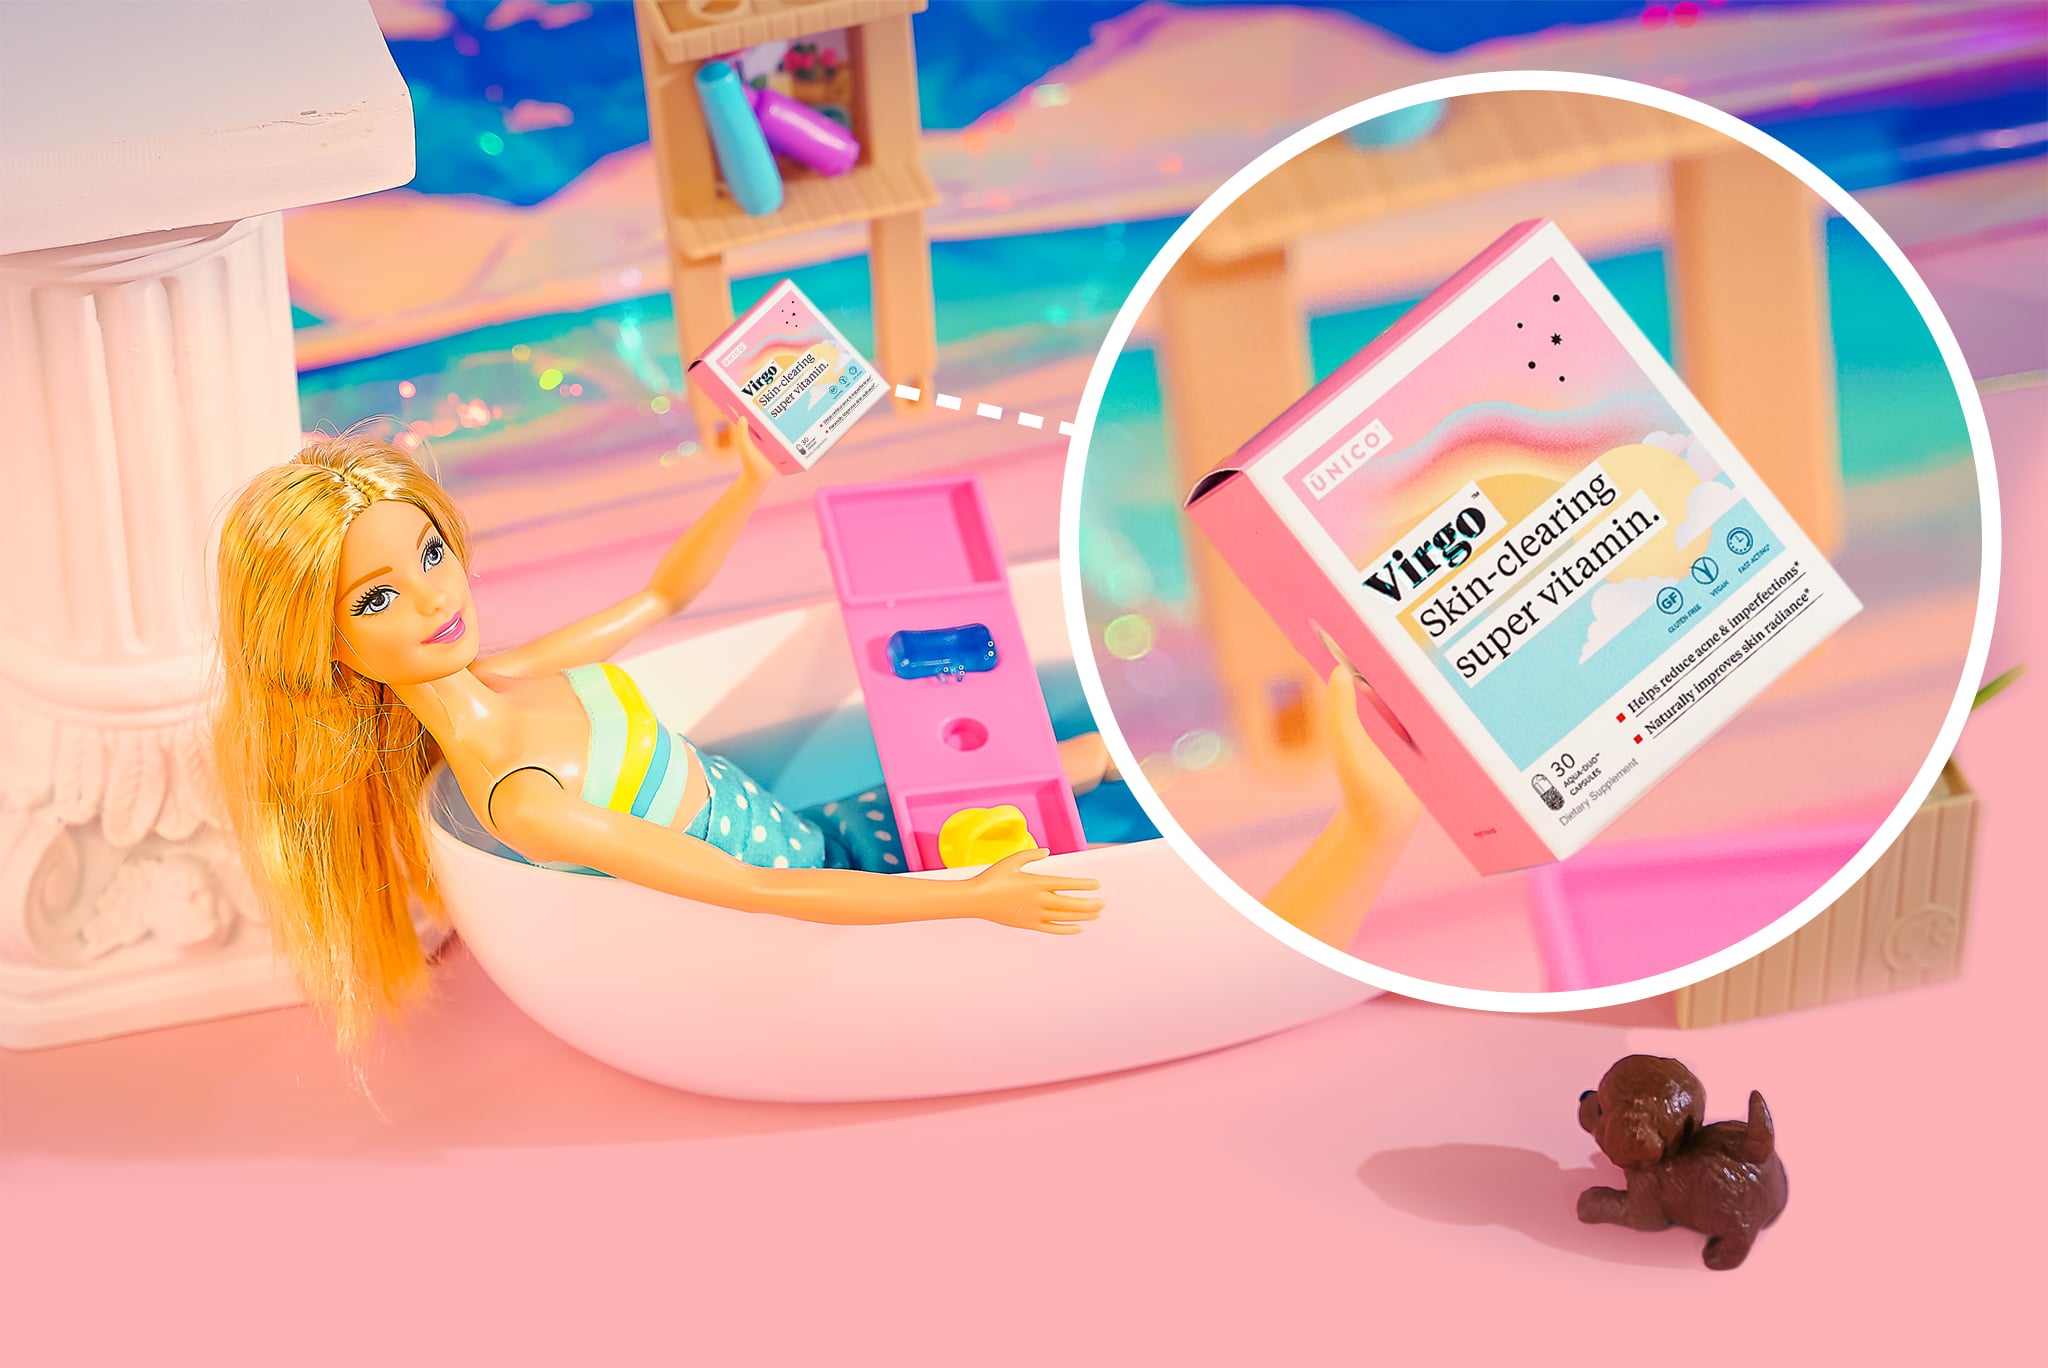 barbie in bathtub holding an antioxidant supplement